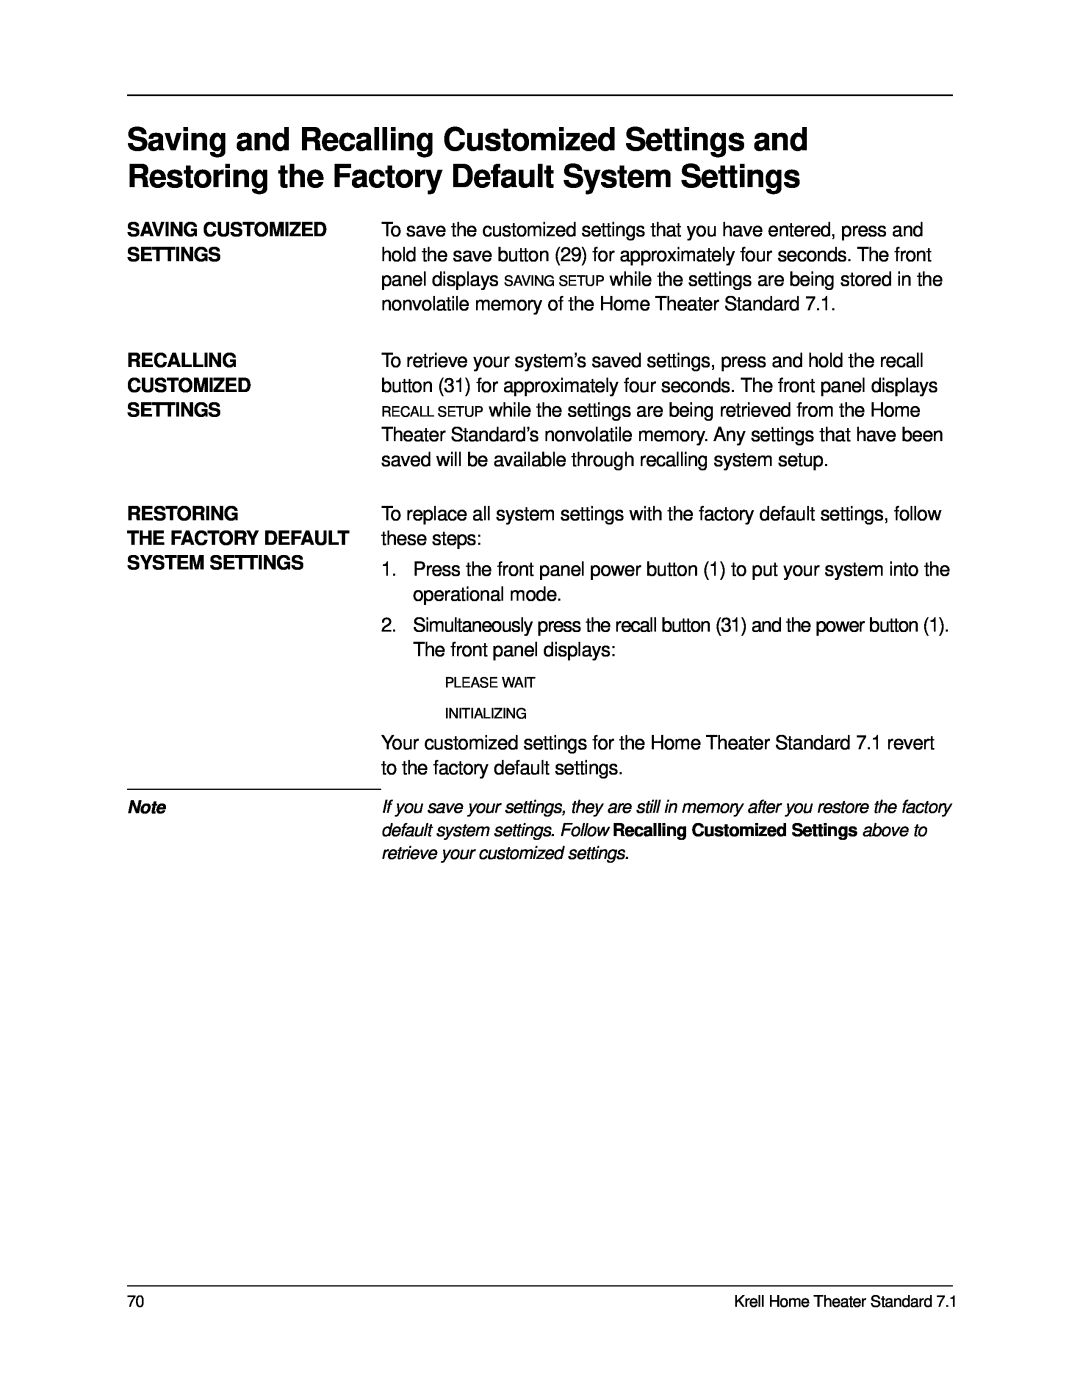 Krell Industries 7.1 manual Saving Customized, Settings, Recalling, Restoring 